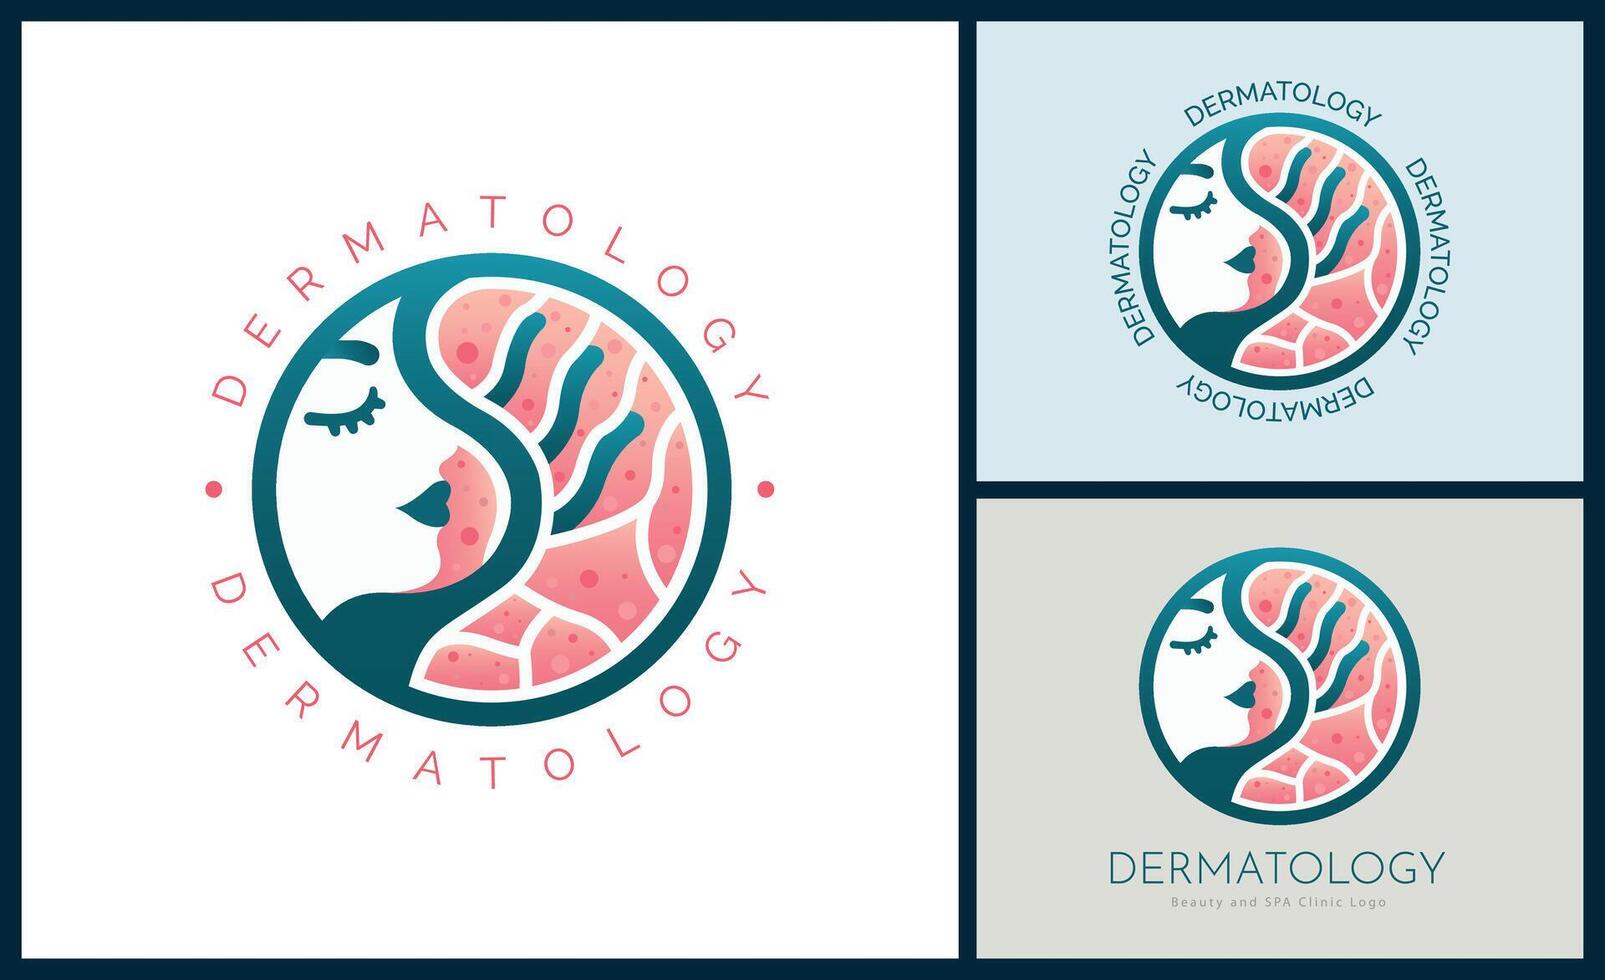 dermatologia pele Cuidado clínica e remédio beleza salão e spa logotipo modelo Projeto vetor